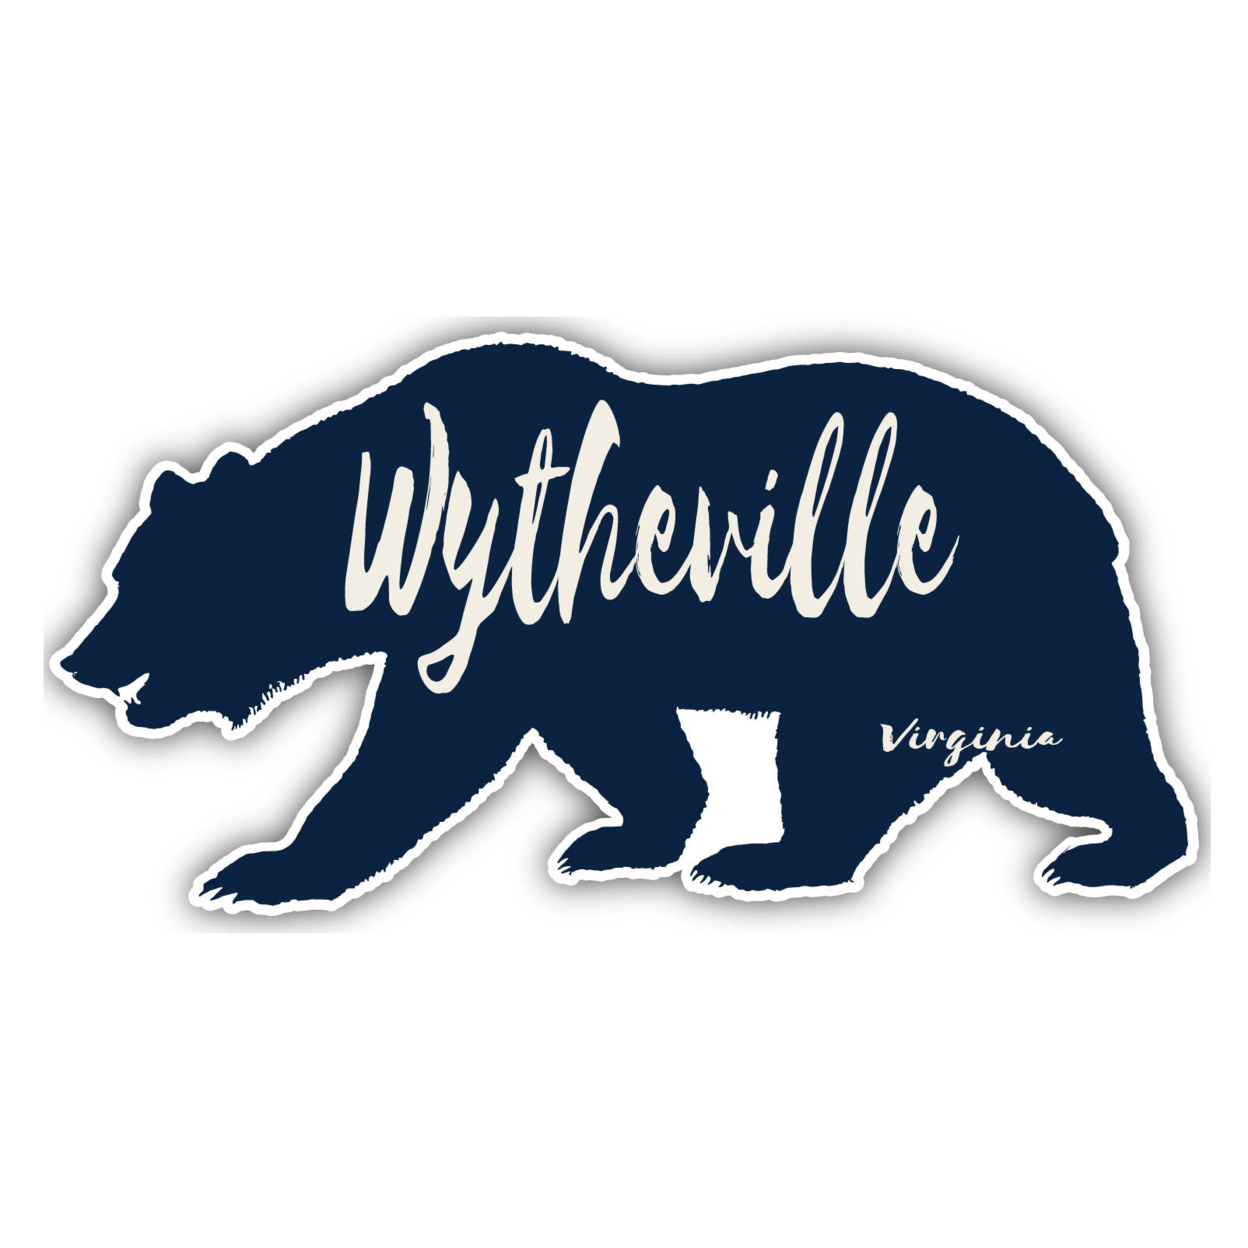 Wytheville Virginia Souvenir Decorative Stickers (Choose Theme And Size) - Single Unit, 2-Inch, Bear